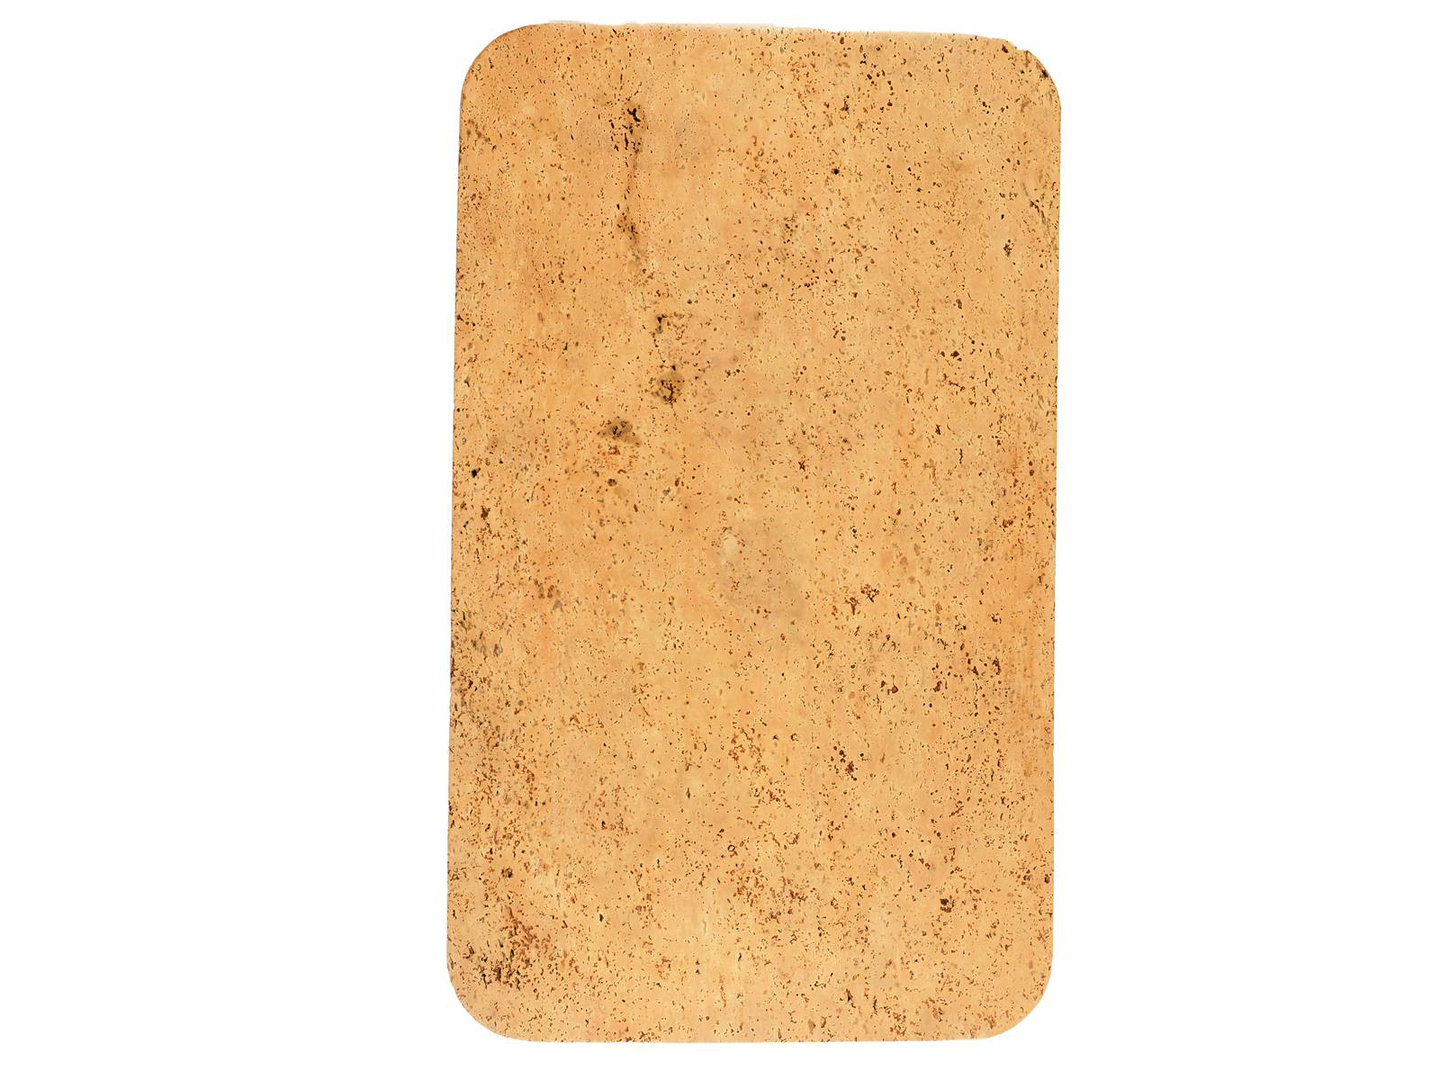 7730 23 1 Trivet natural cork plate